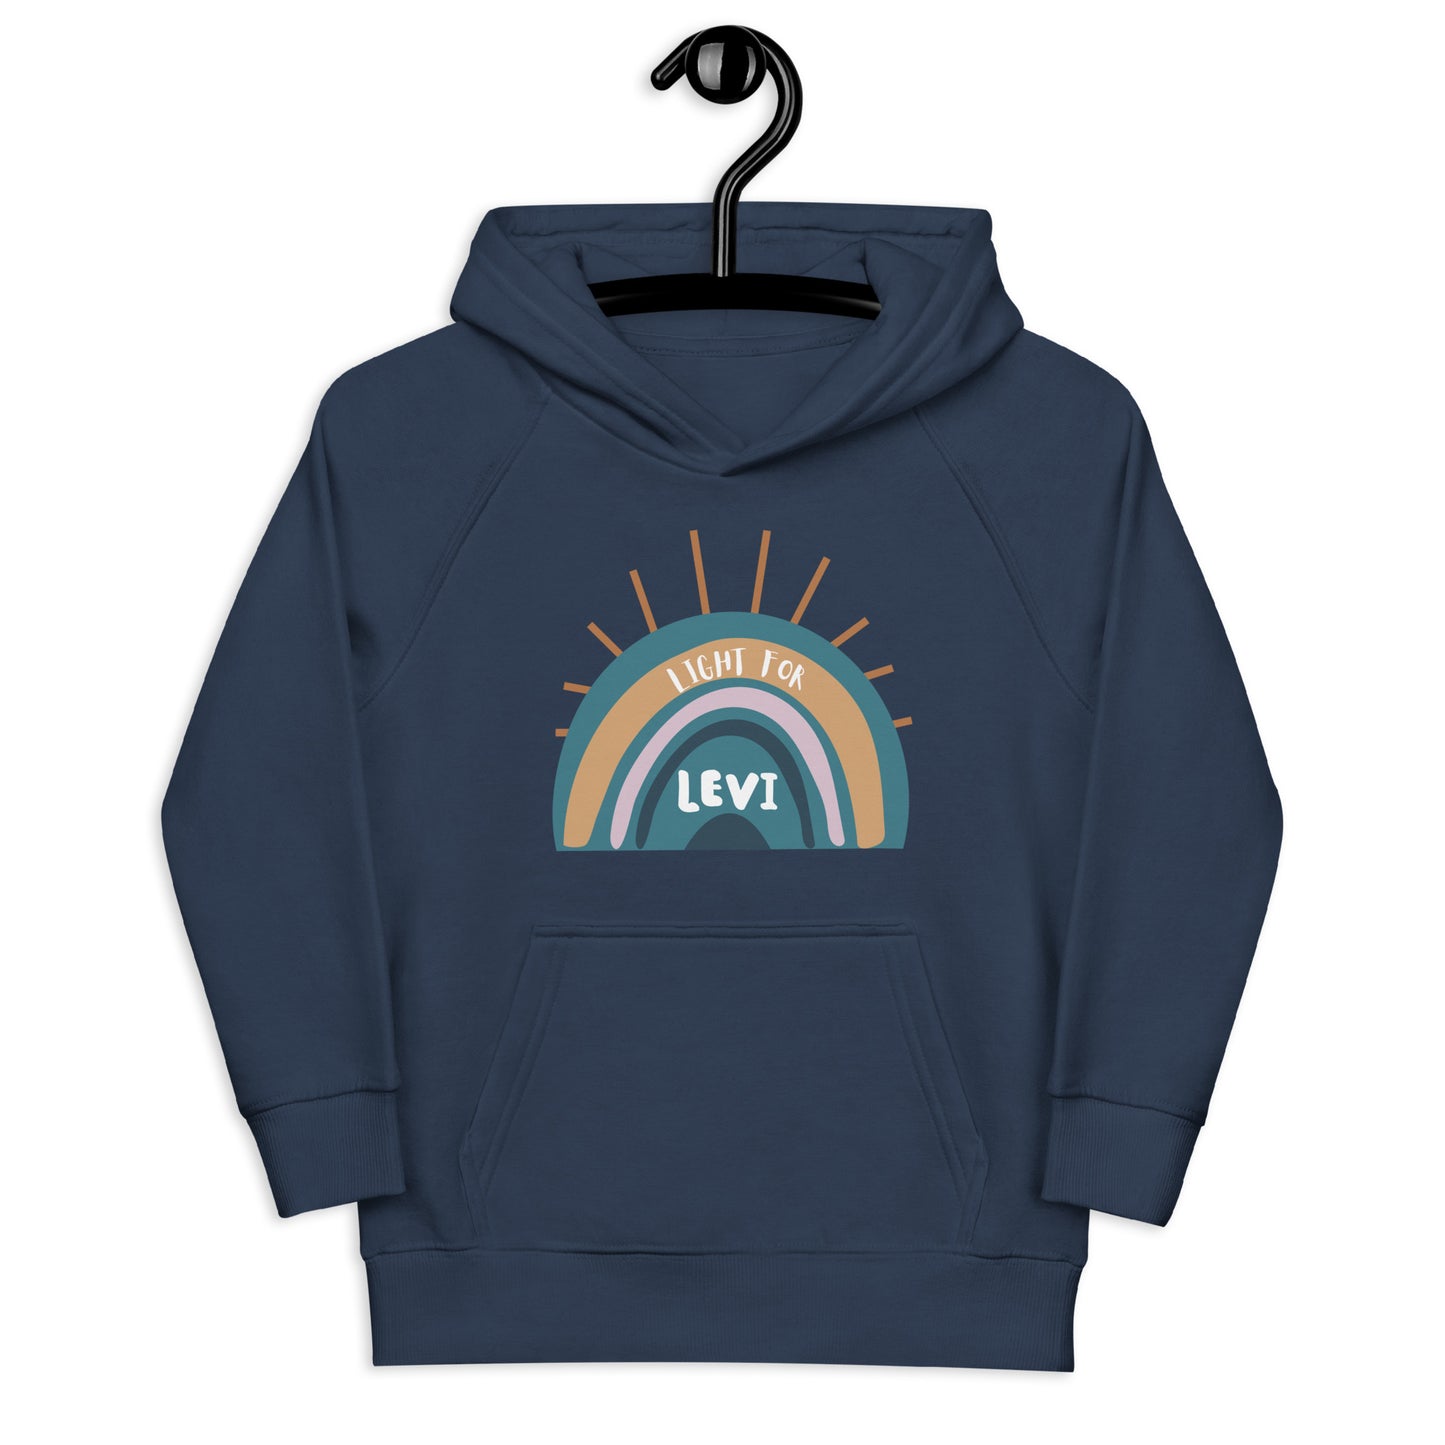 Light For Levi — Kids Eco Hoodie